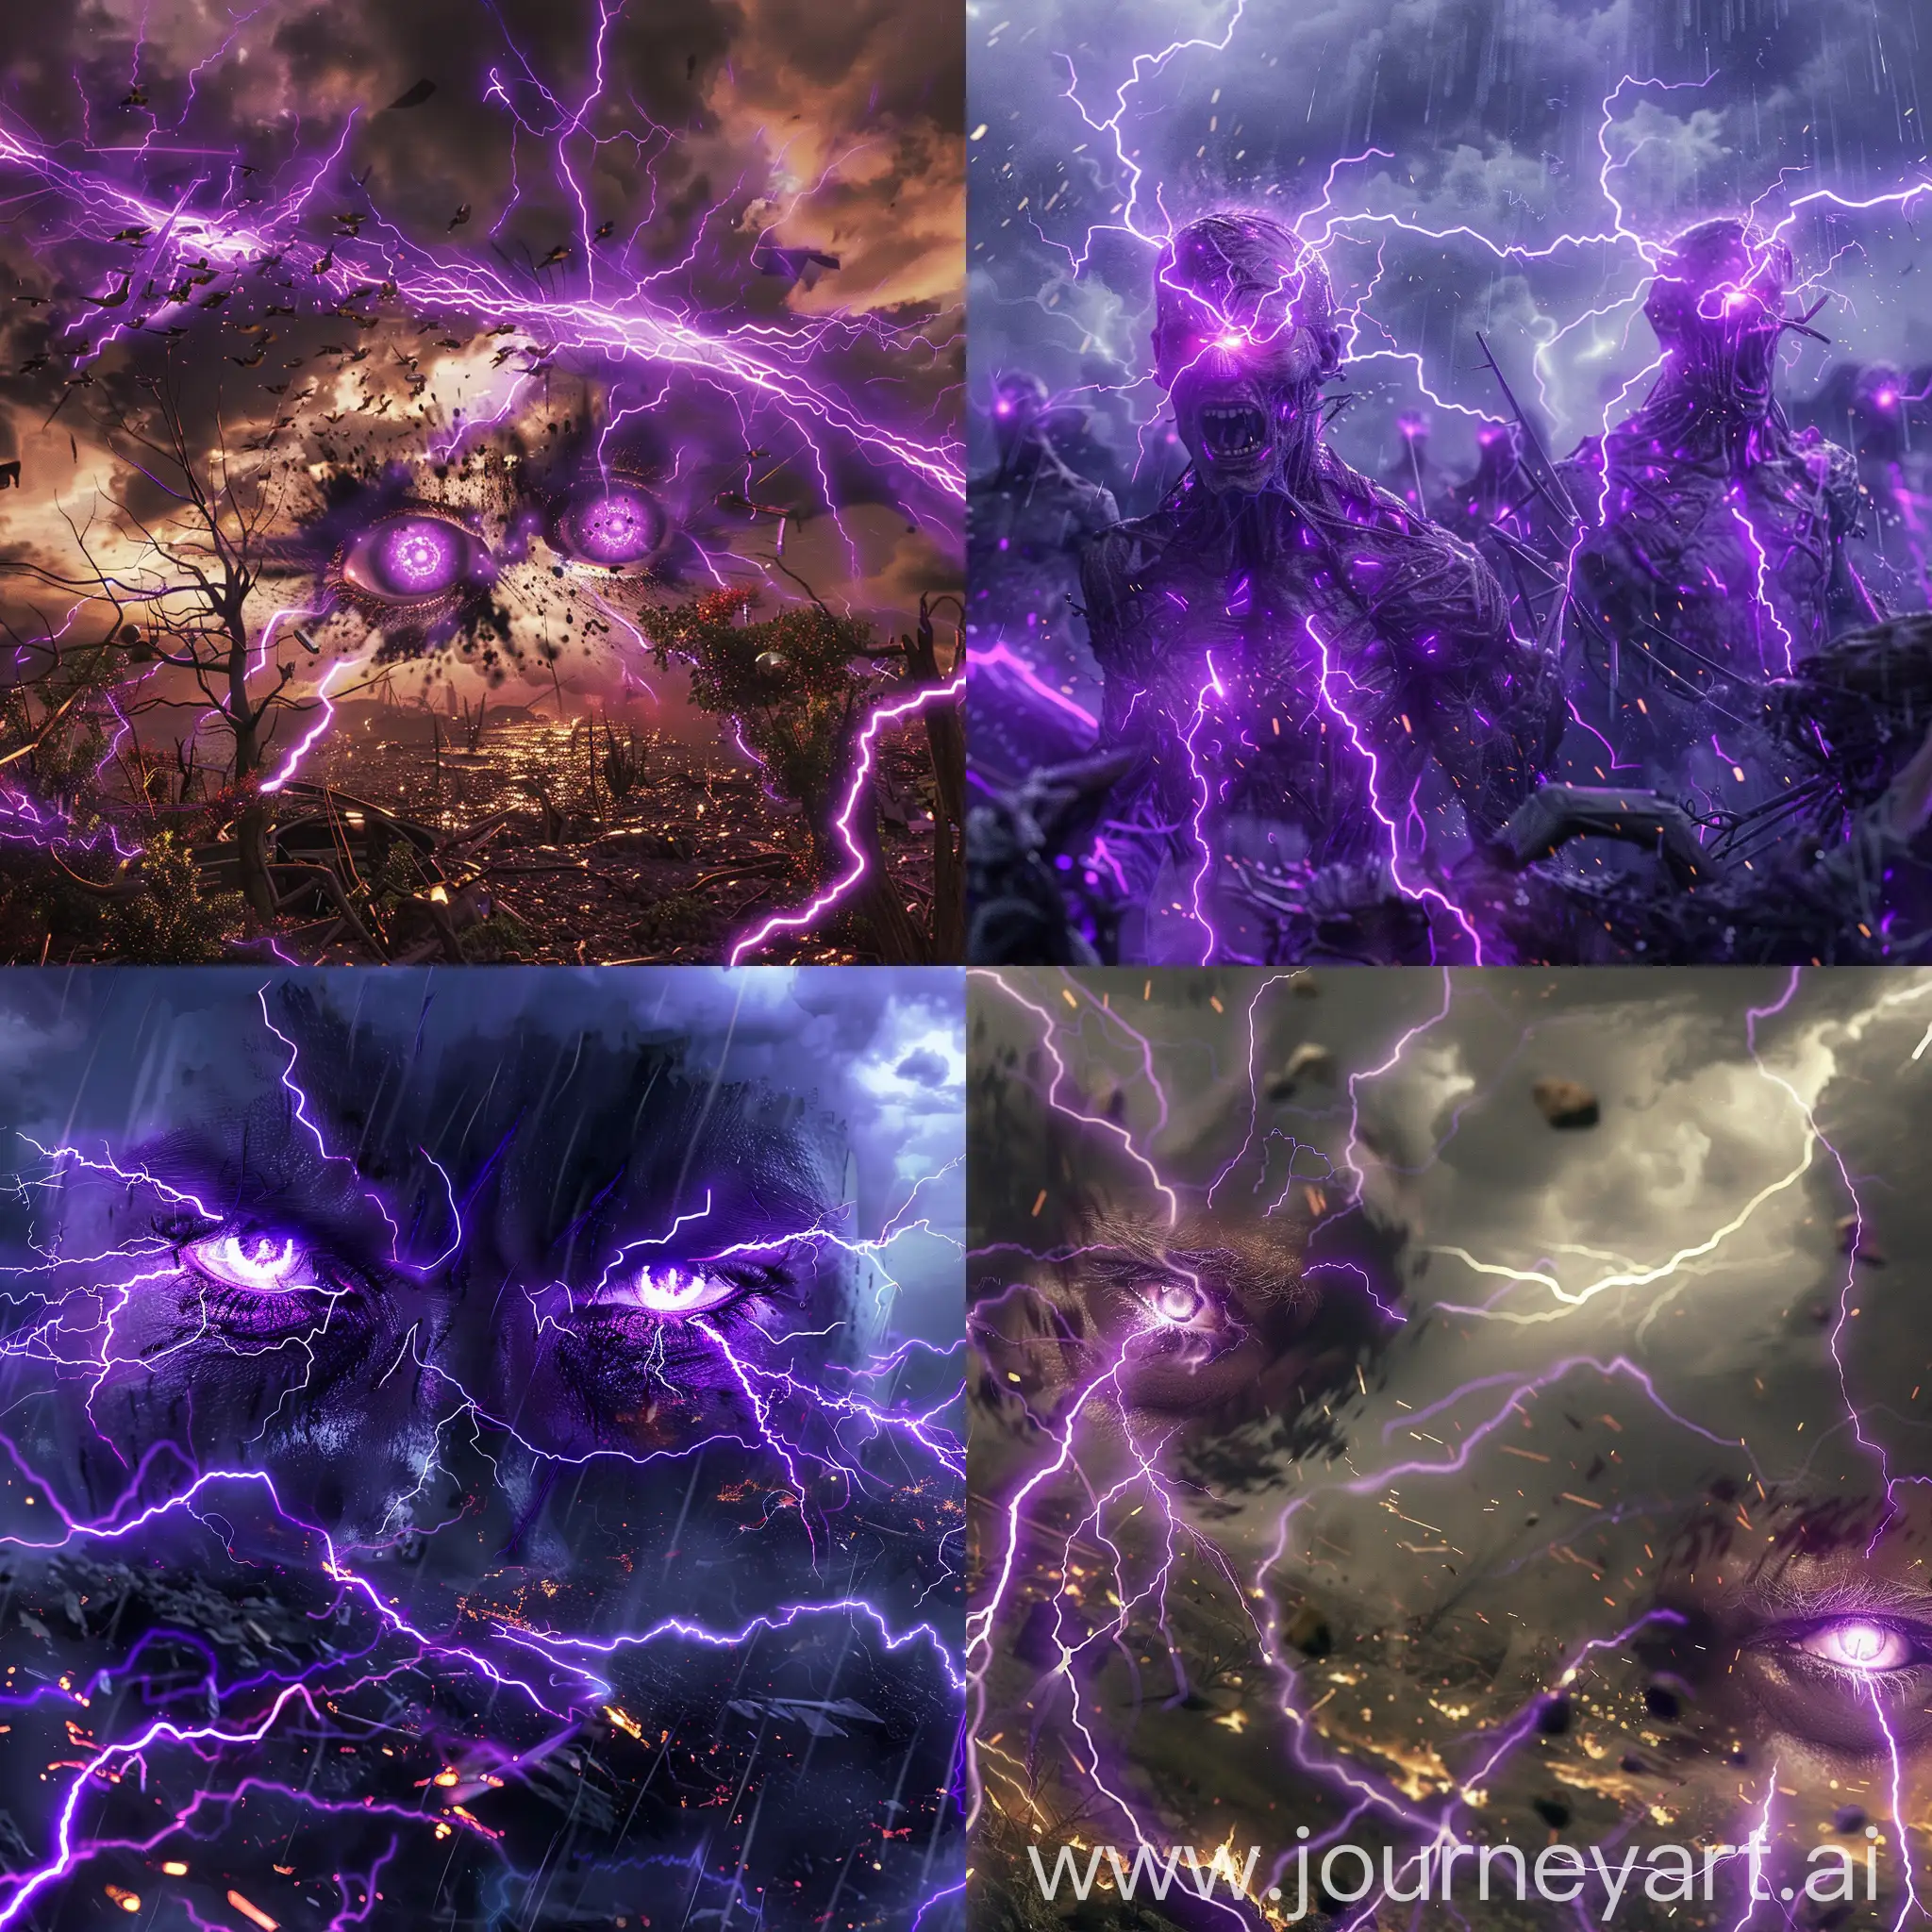 Intense-Purple-Lightning-Storm-in-Devastated-Environment